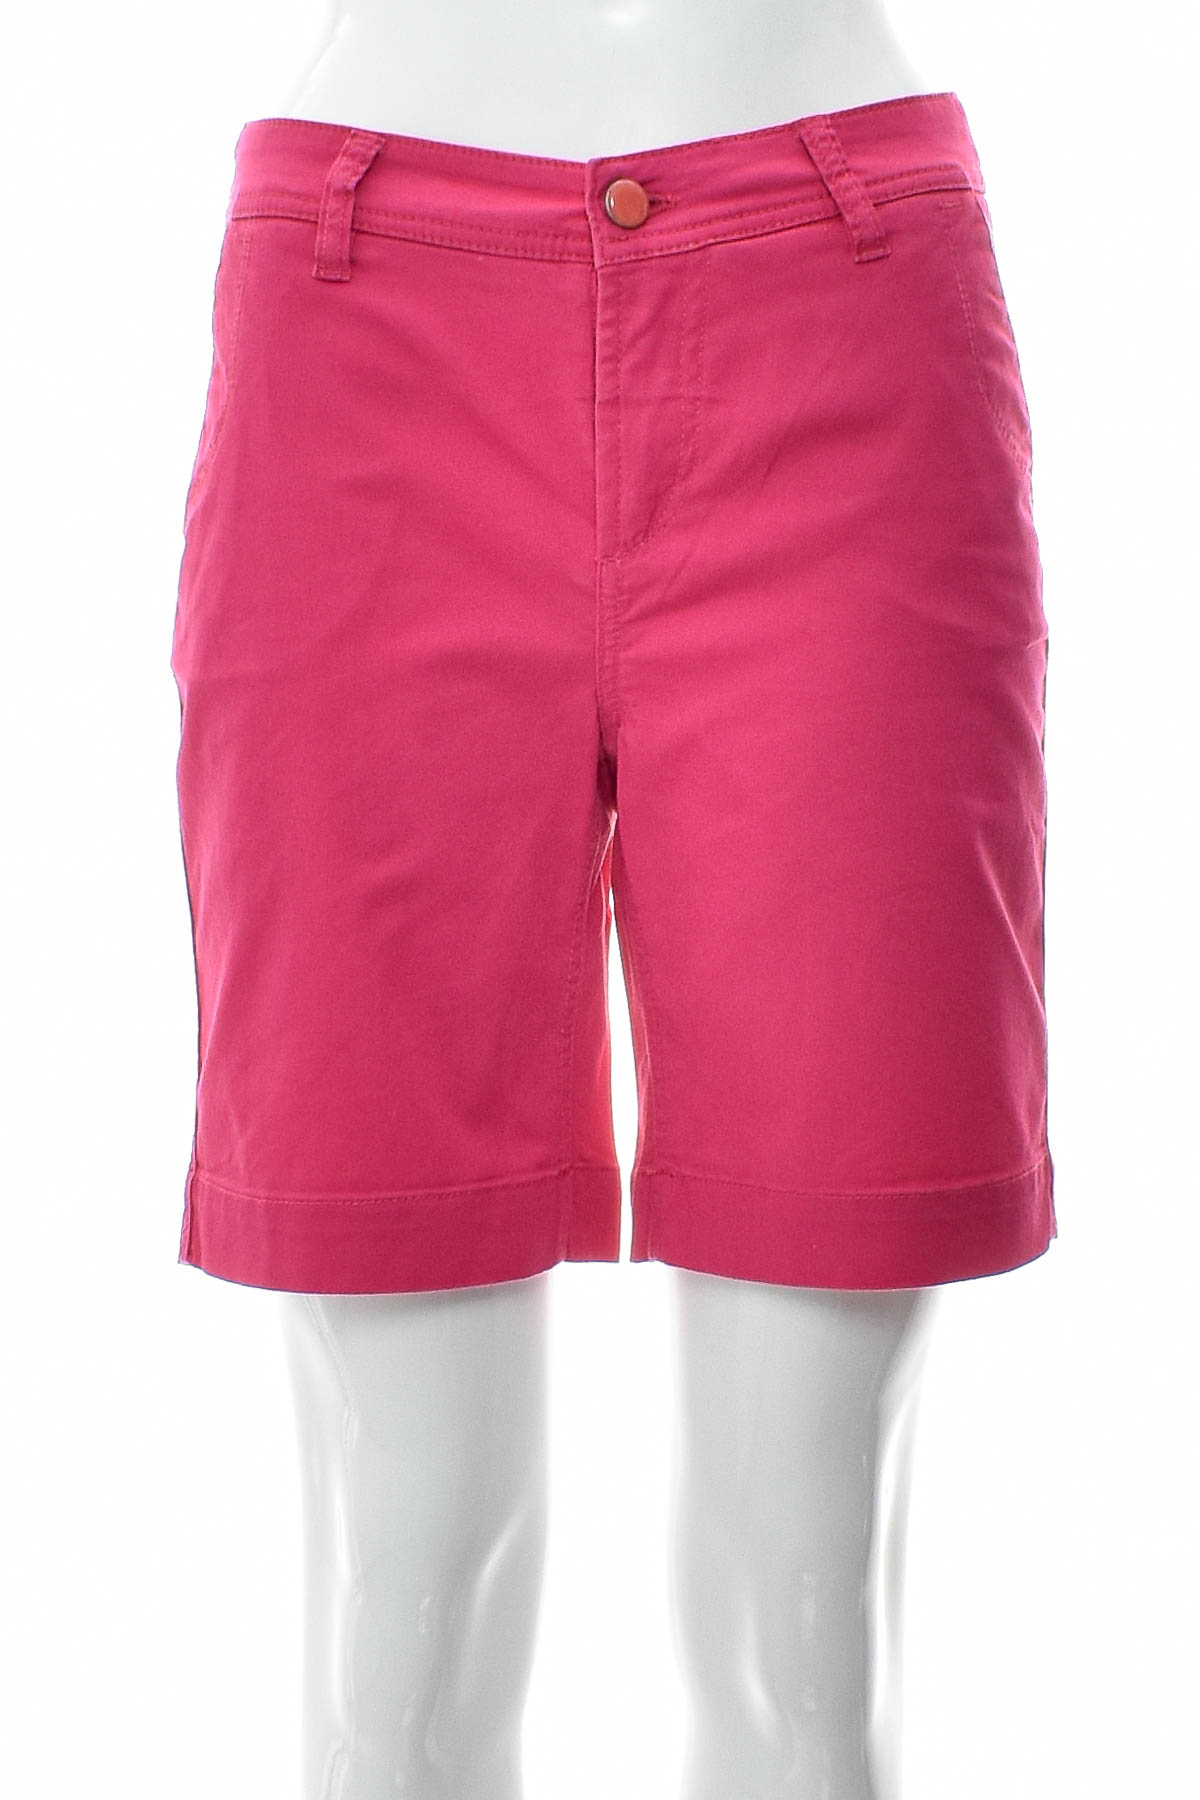 Female shorts - B.C. Best Connections - 0